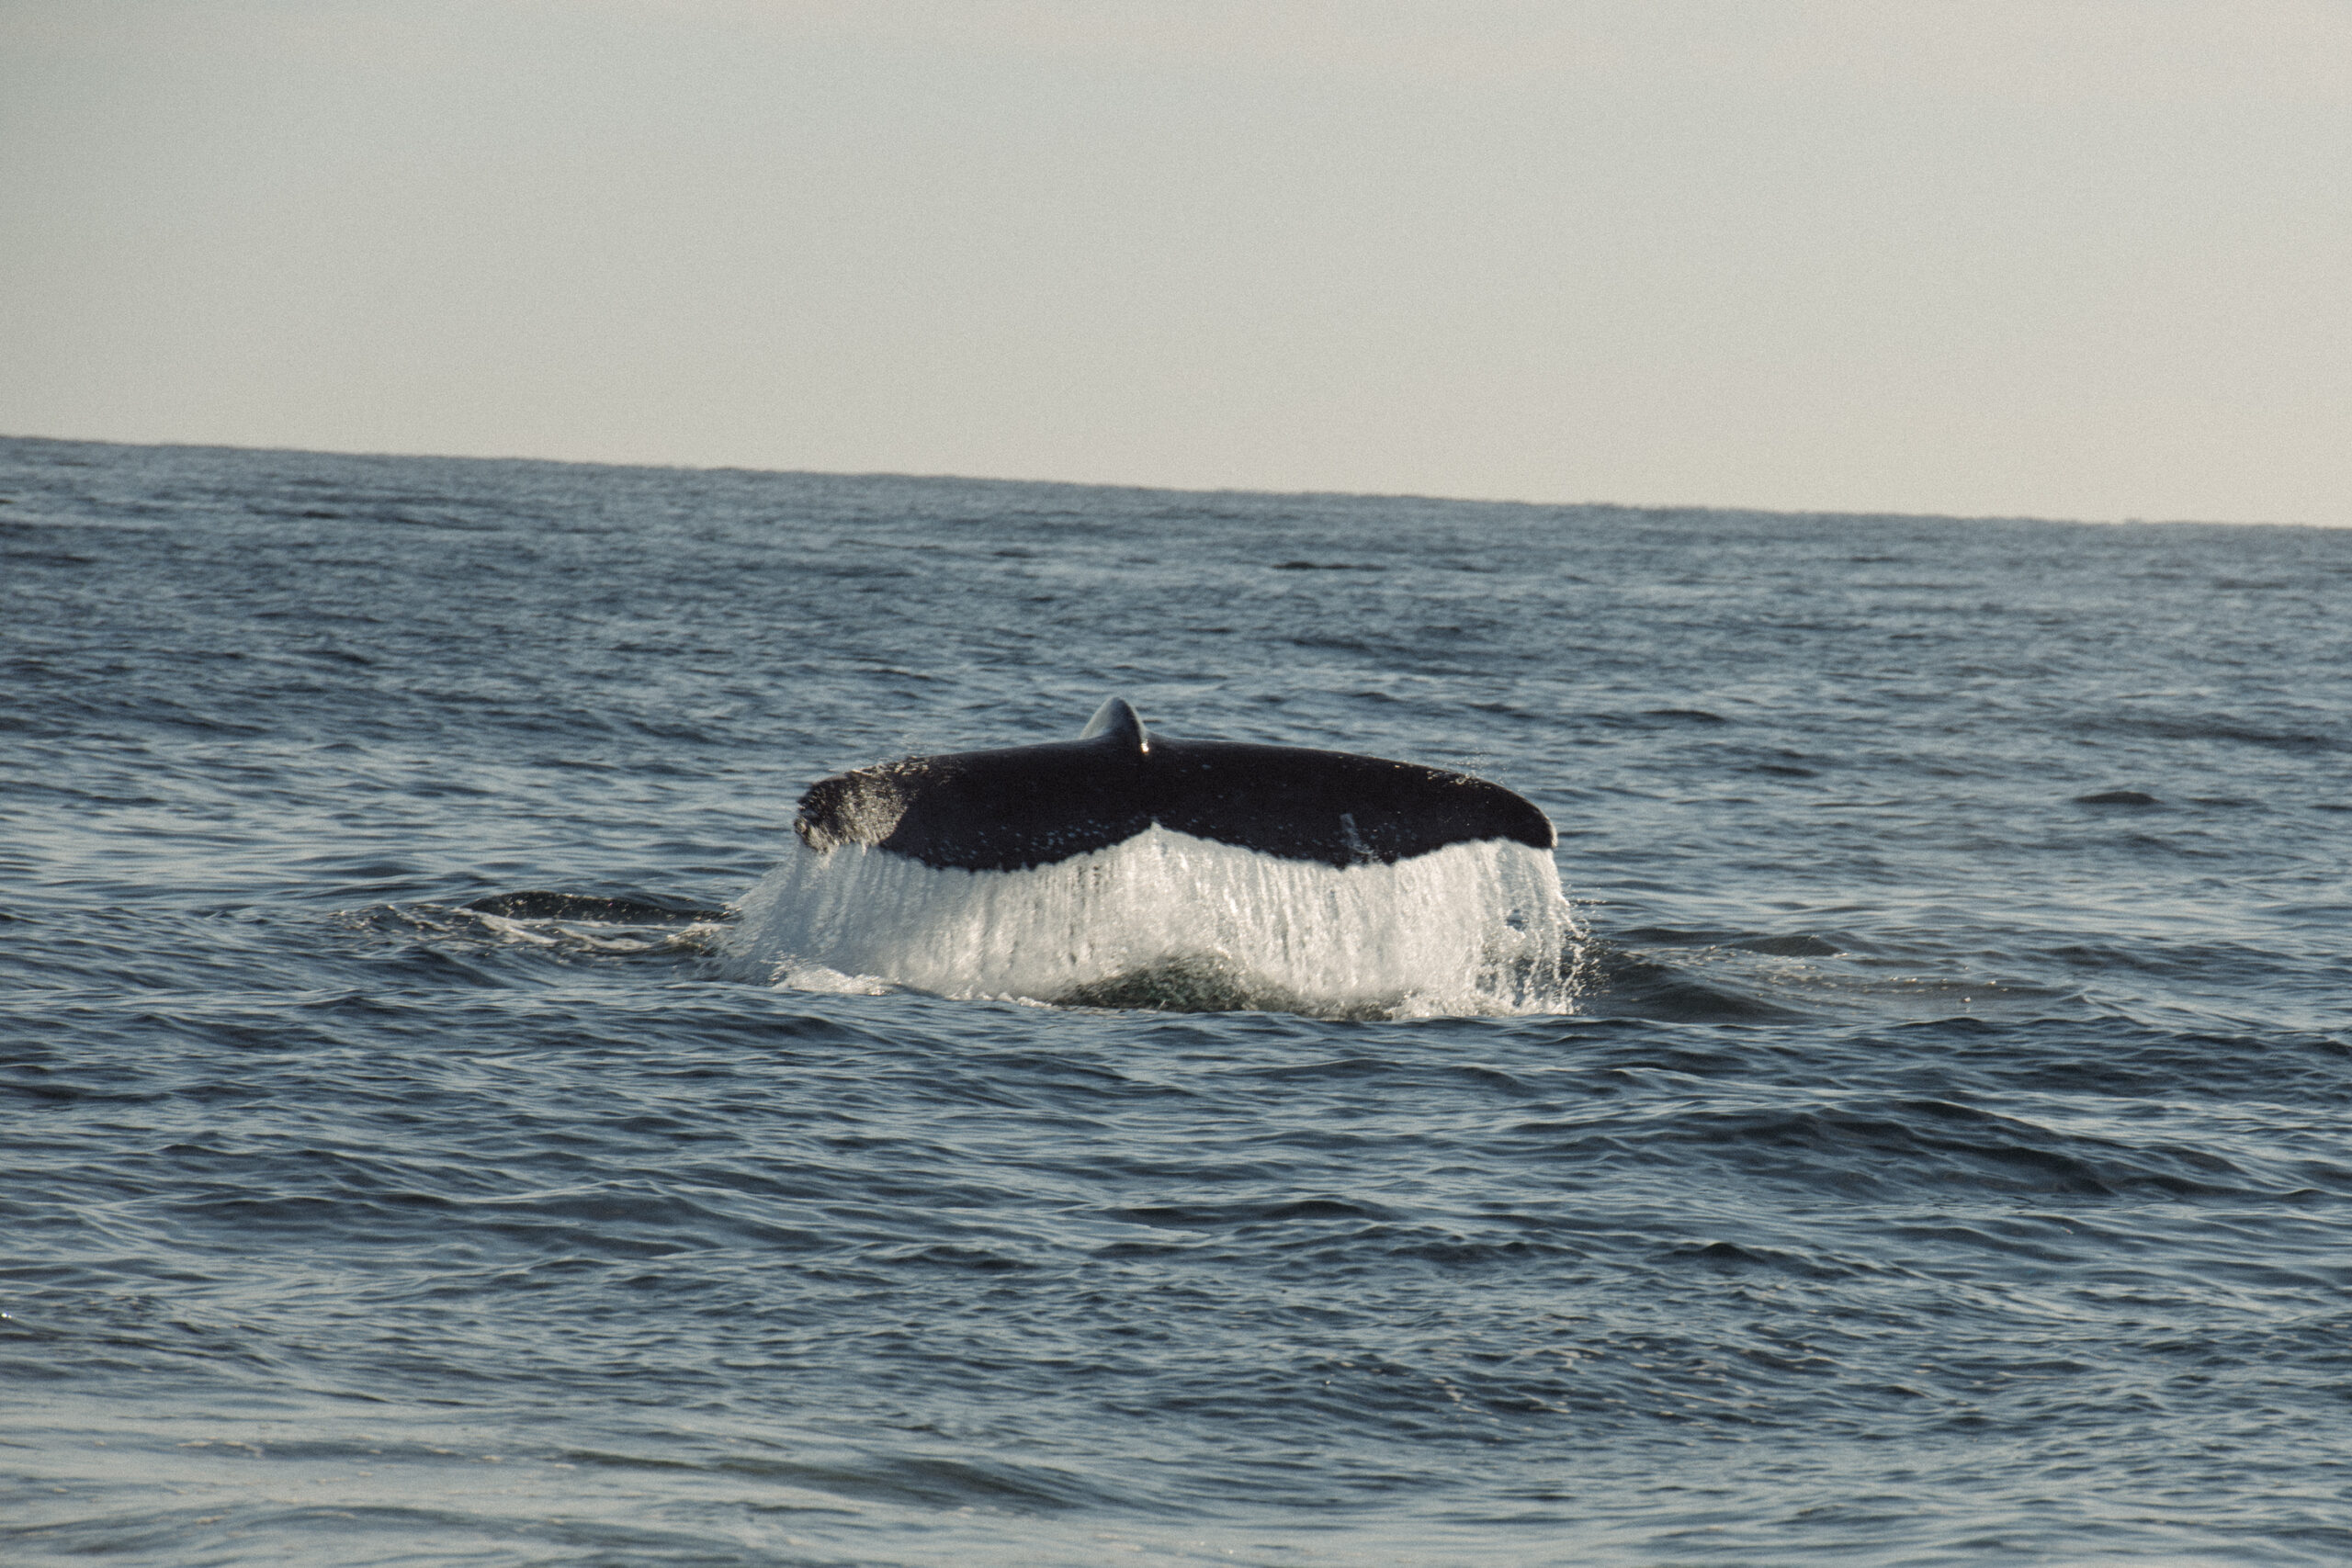 Safari-Style Whale Watching Gold Coast